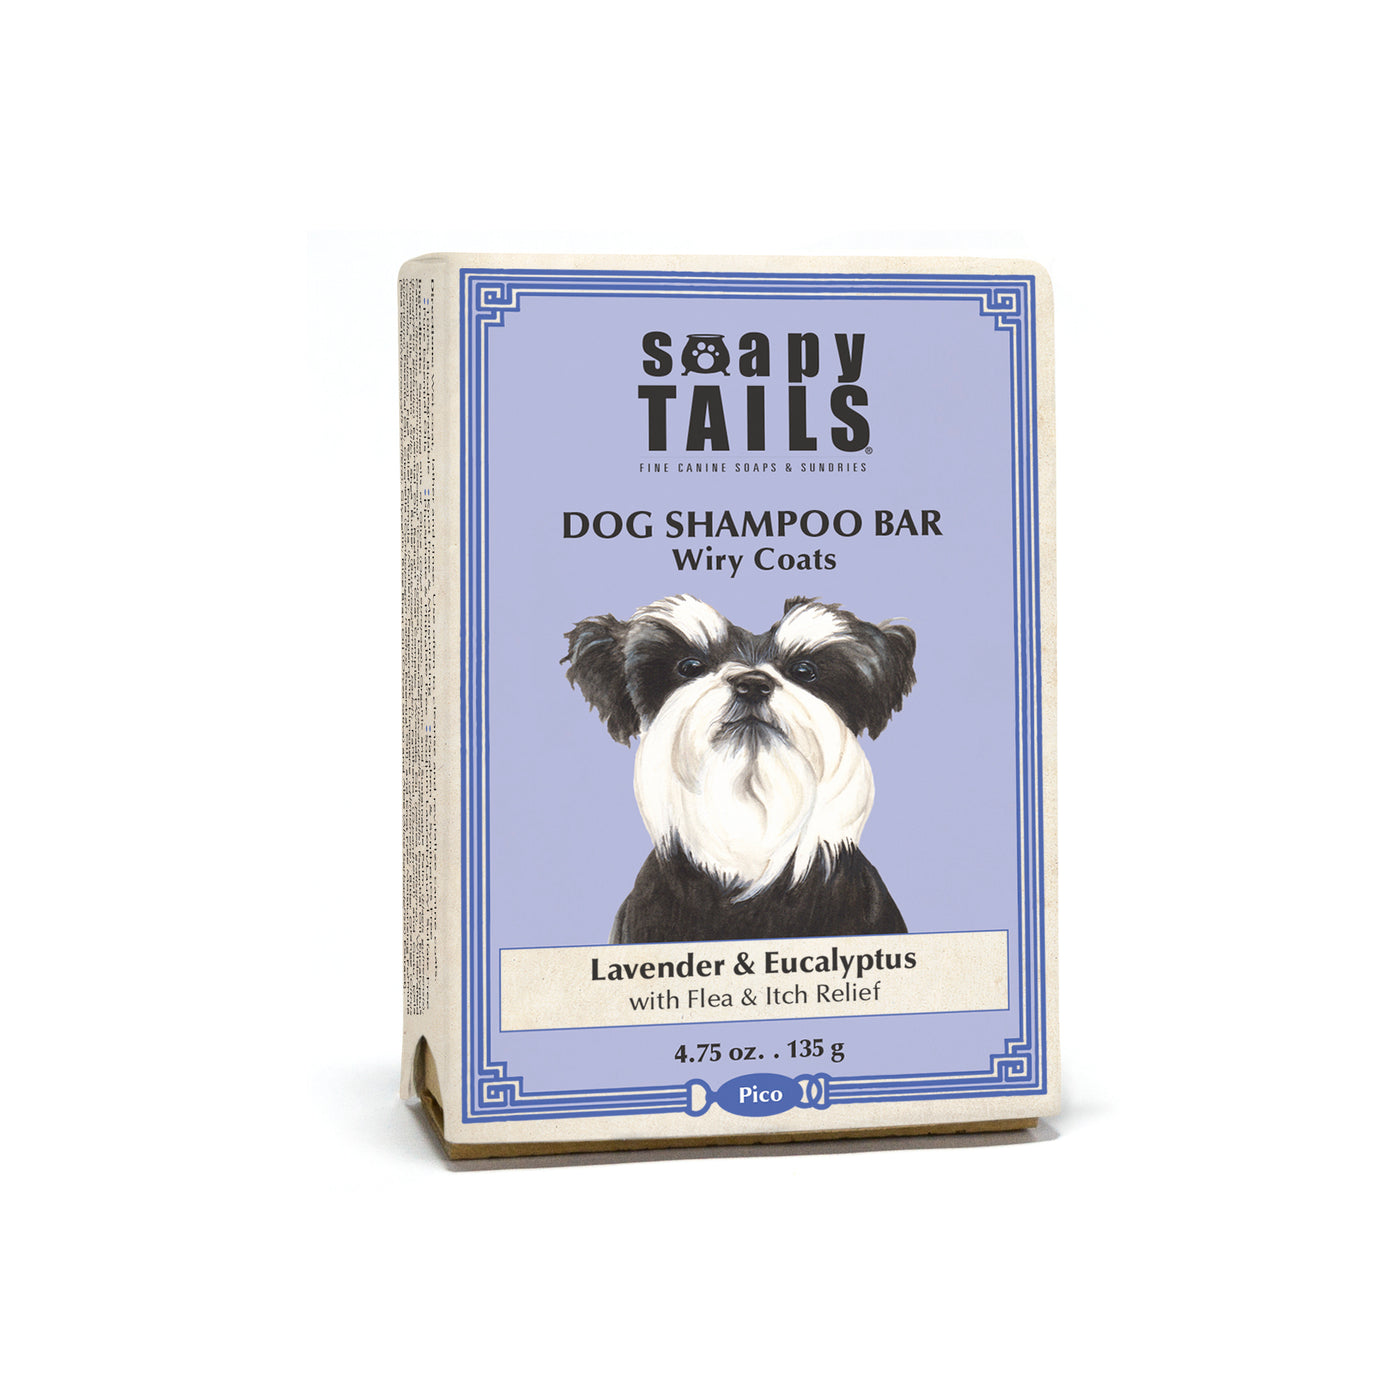 Lavender & Eucalyptus Dog Shampoo Bar for Wiry Coats 4.75 oz